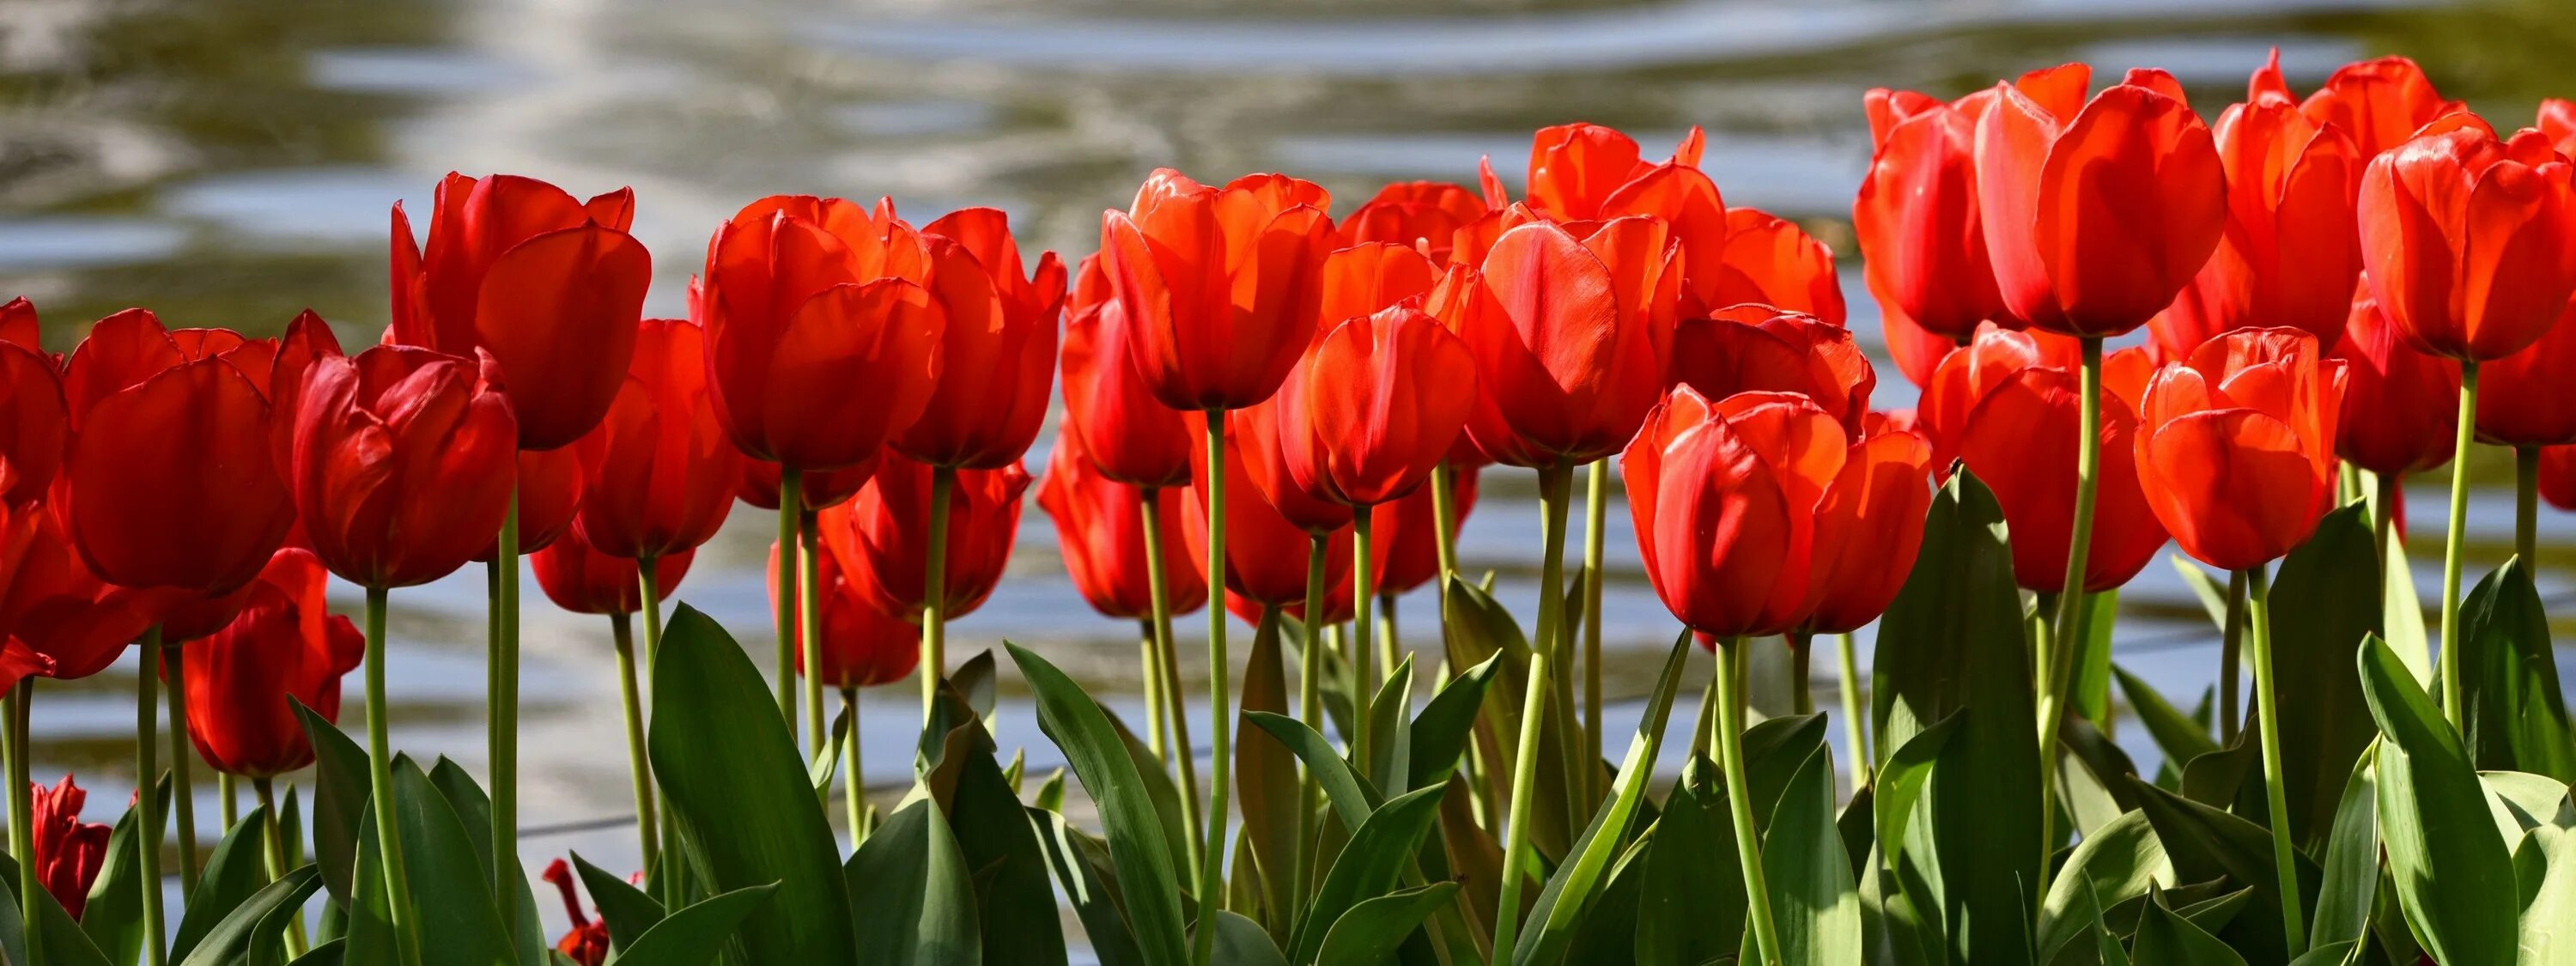 3 красных тюльпана. Красный тюльпан Казань реальные. Красные степные тюльпаны. Алые тюльпаны. Тюльпаны фото.